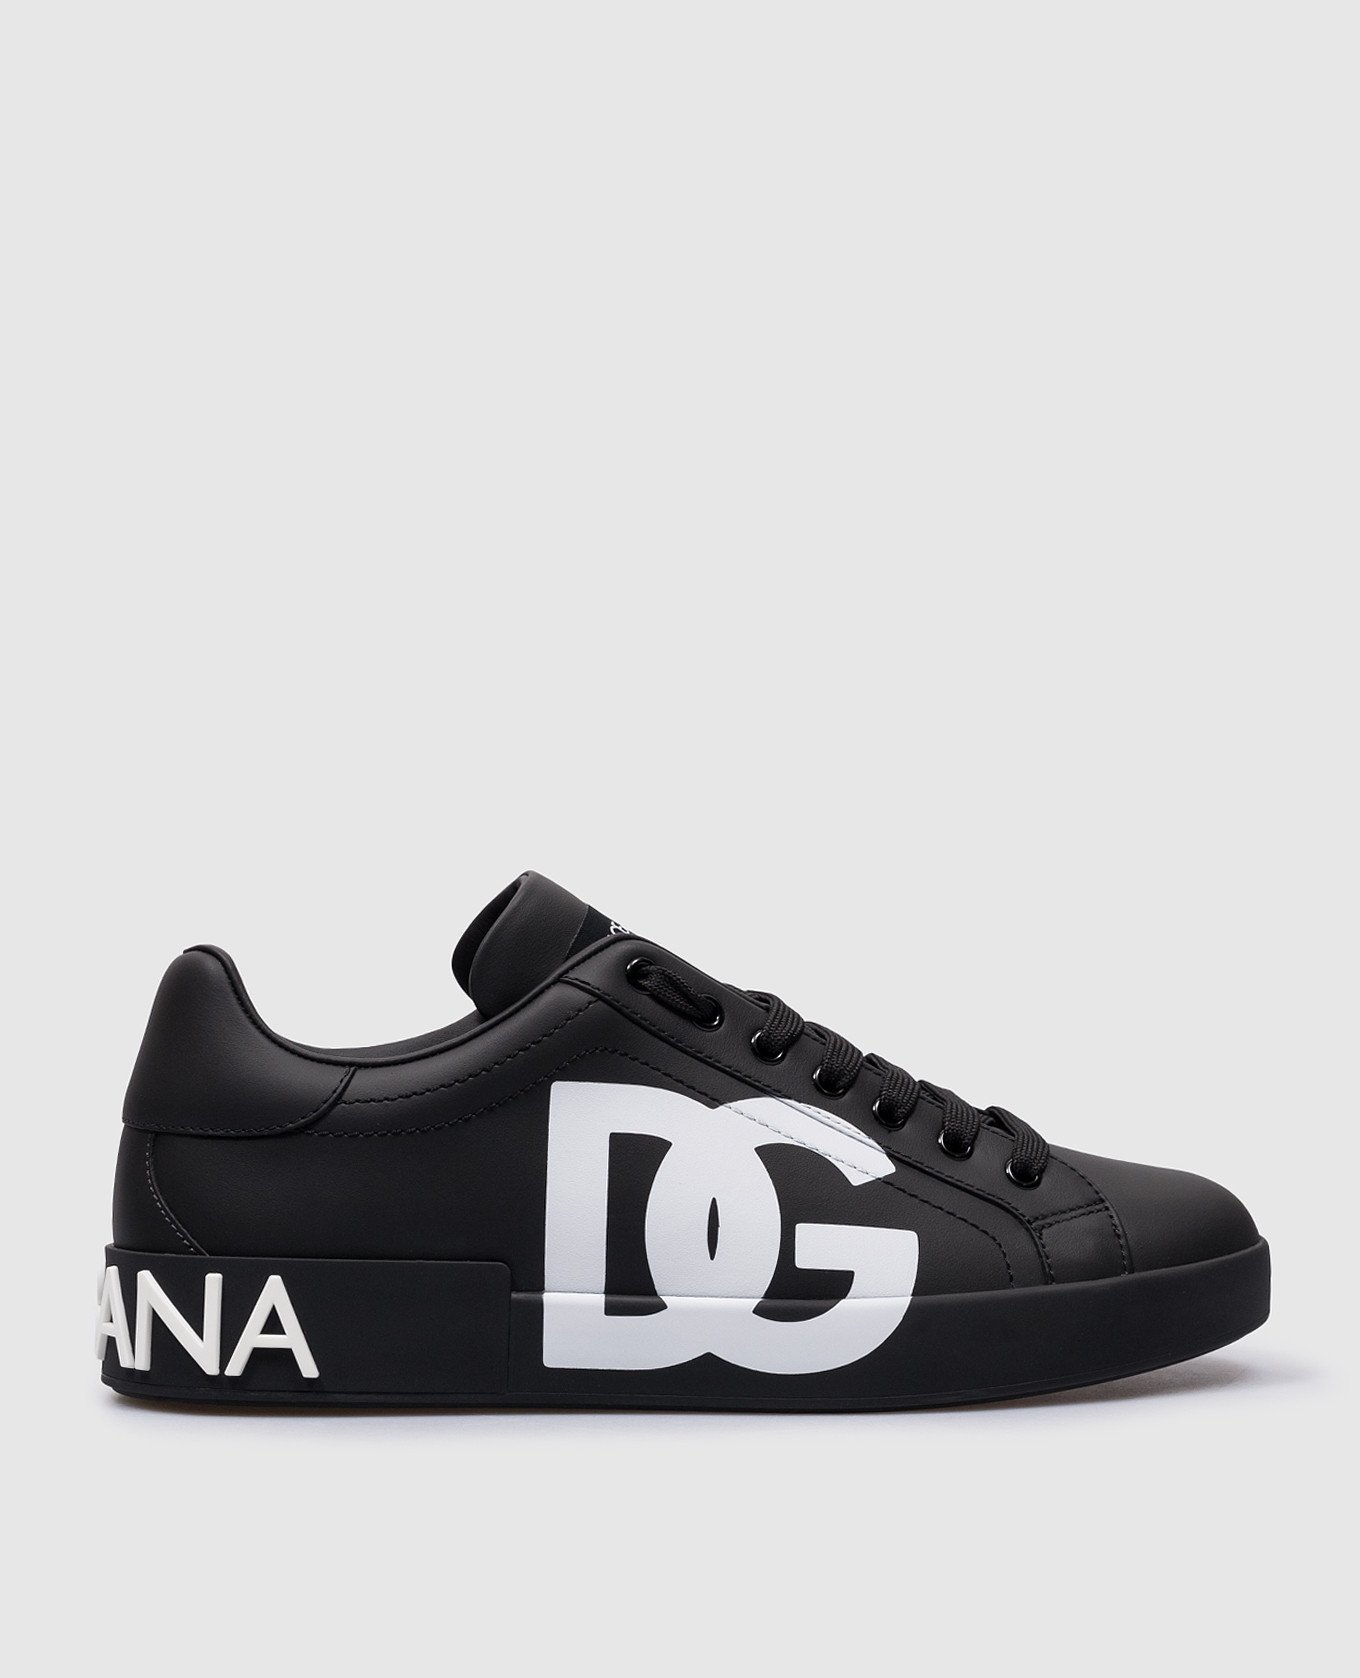 Portofino black leather sneakers with contrasting logo